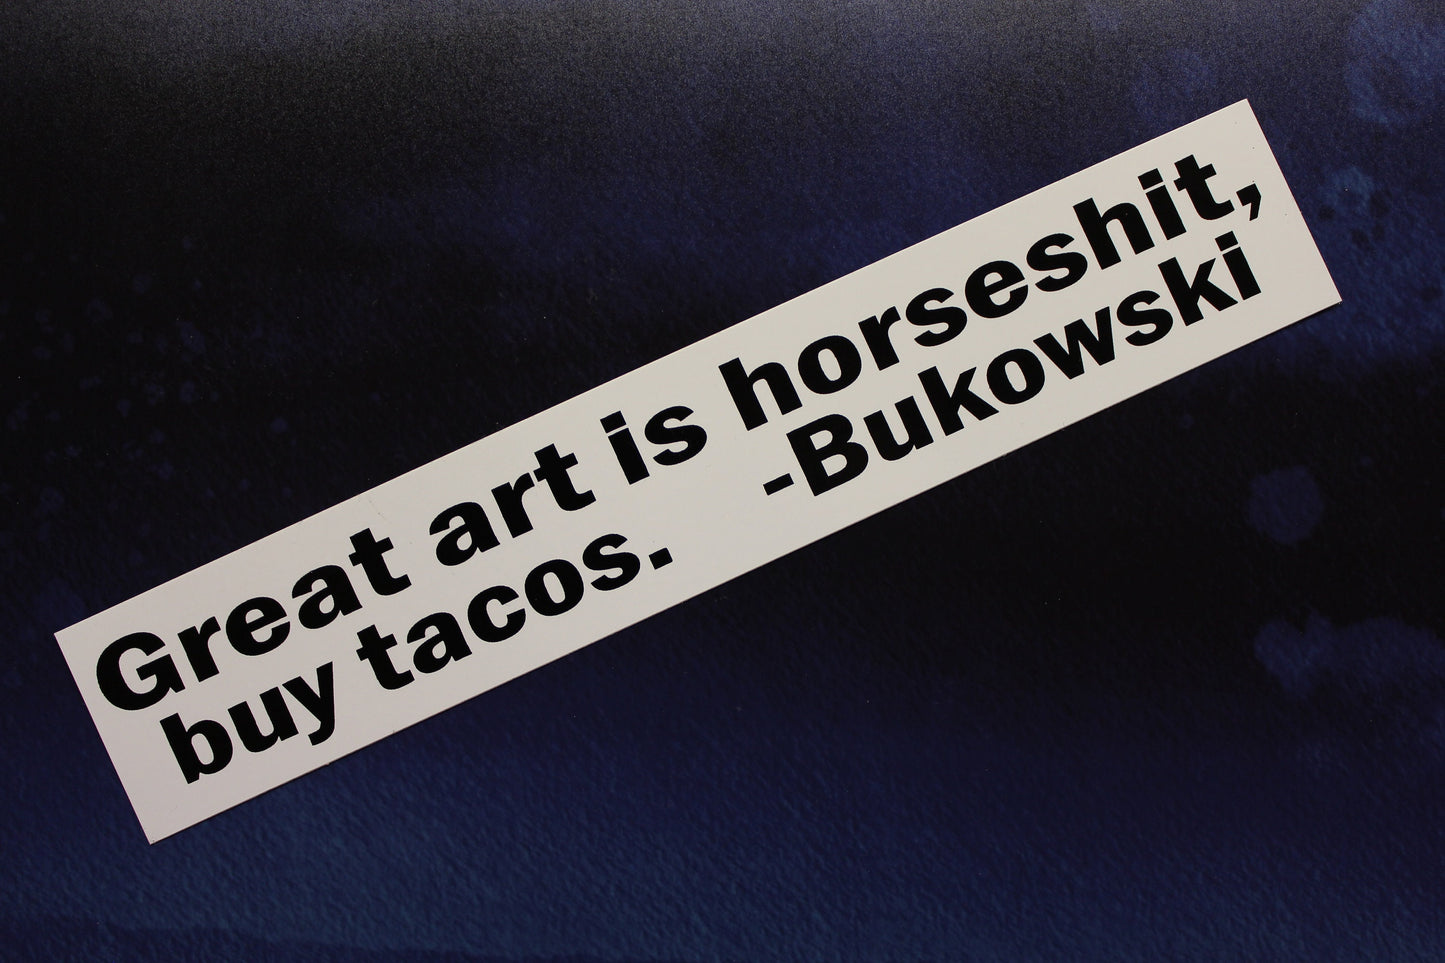 Charles Bukowski  Great art is horsesh#t, buy tacos vinyl sticker bumper car bike laptop guitar